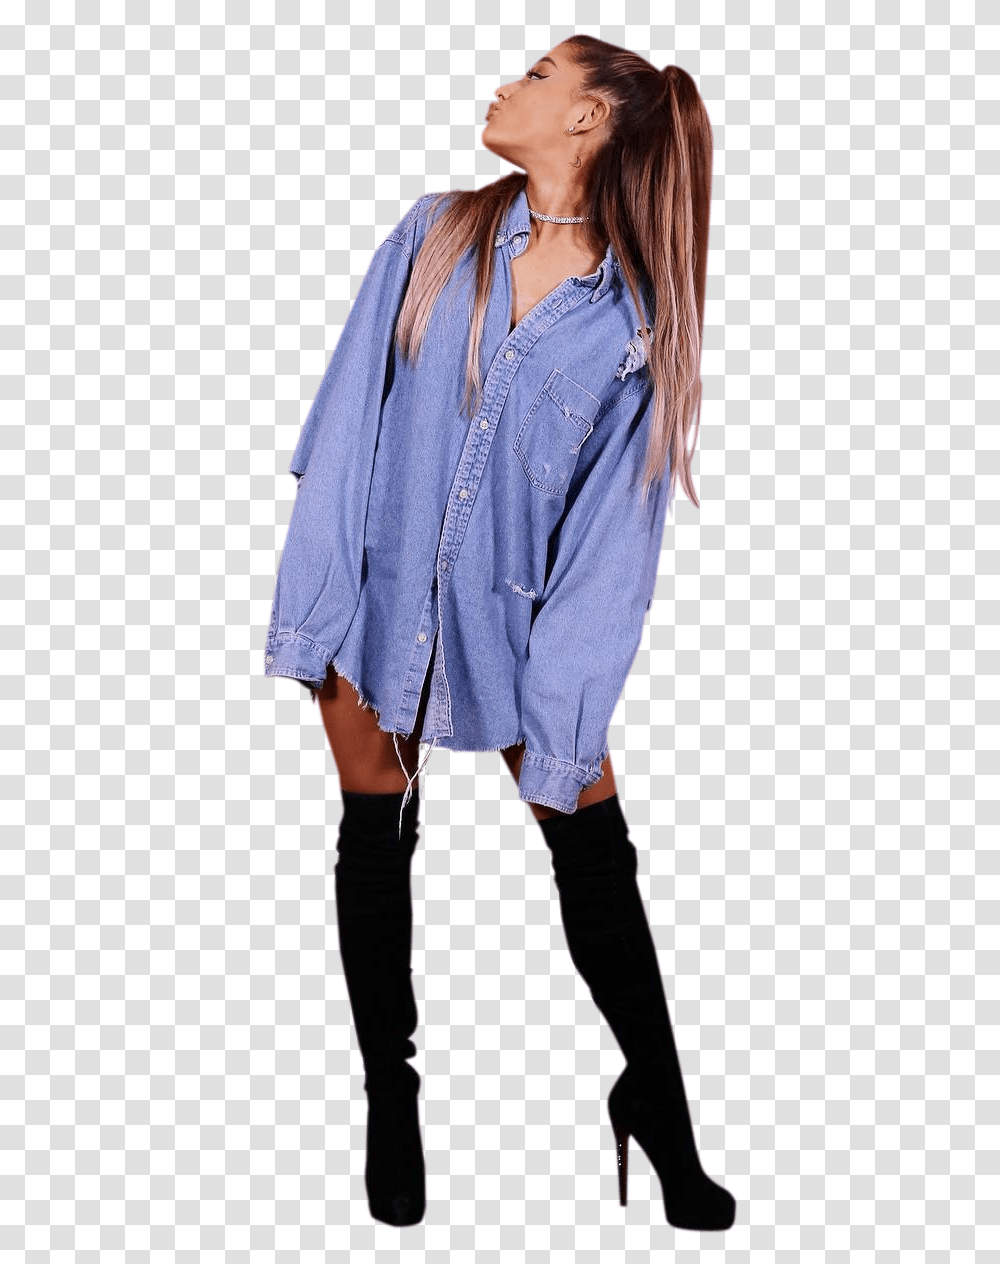 Ariana Grande Clipart Blue Ariana Grande Black Thigh Highs, Pants, Apparel, Jeans Transparent Png